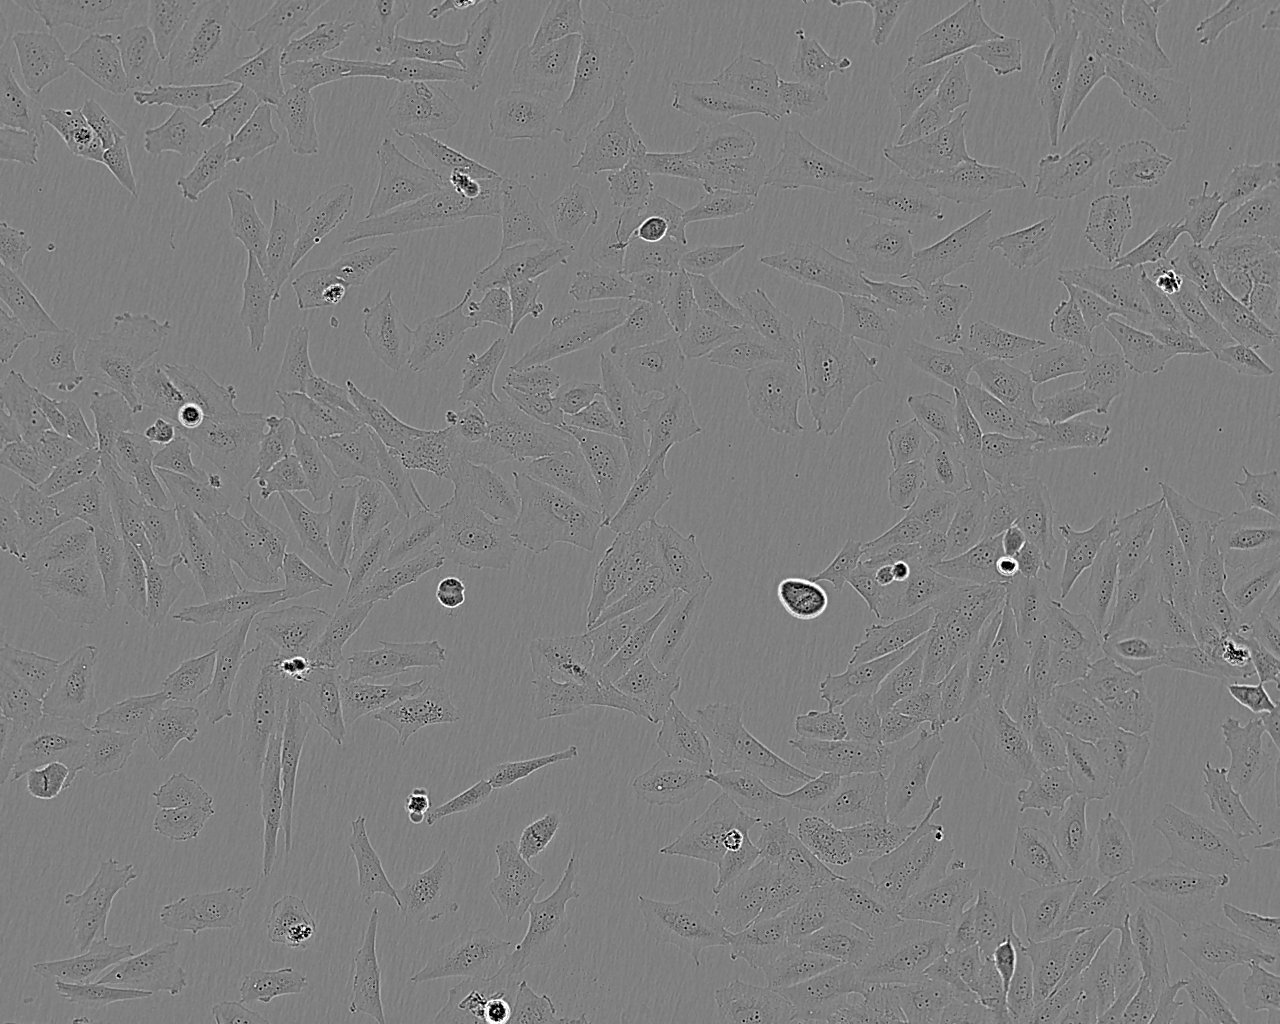 IB-RS-2 epithelioid cells猪肾细胞系